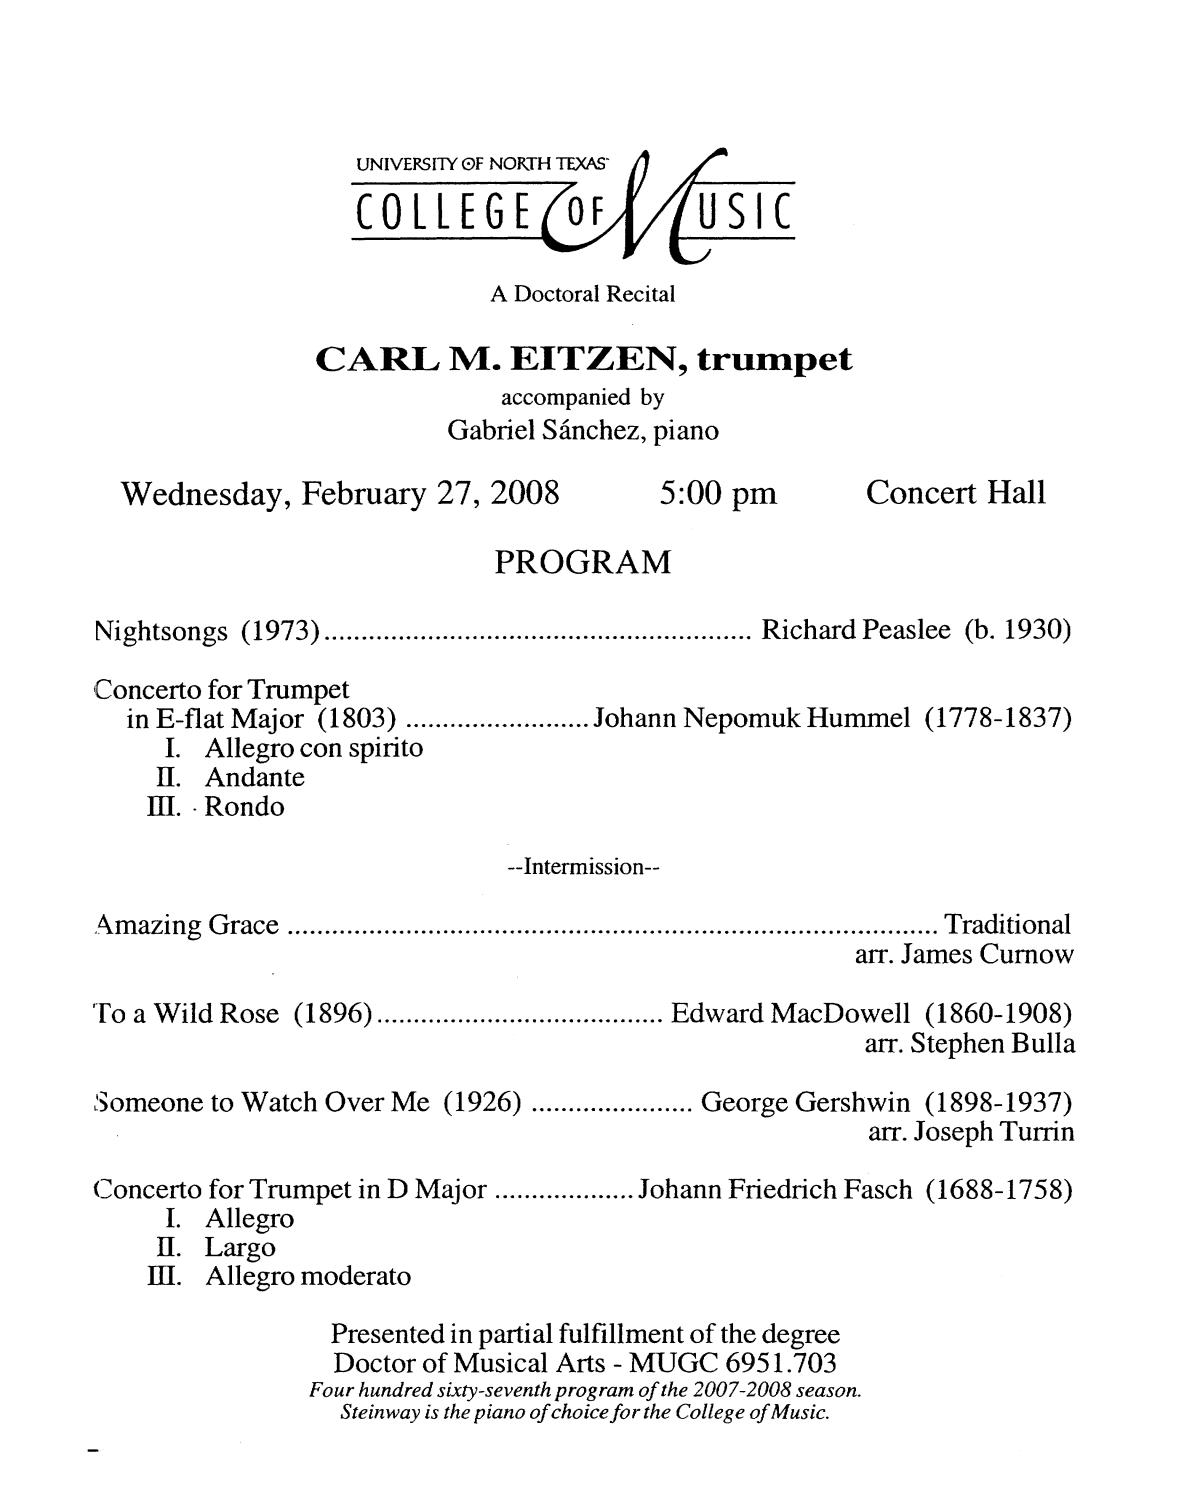 College of Music program book 2007-2008 Student Performances Vol. 2
                                                
                                                    34
                                                